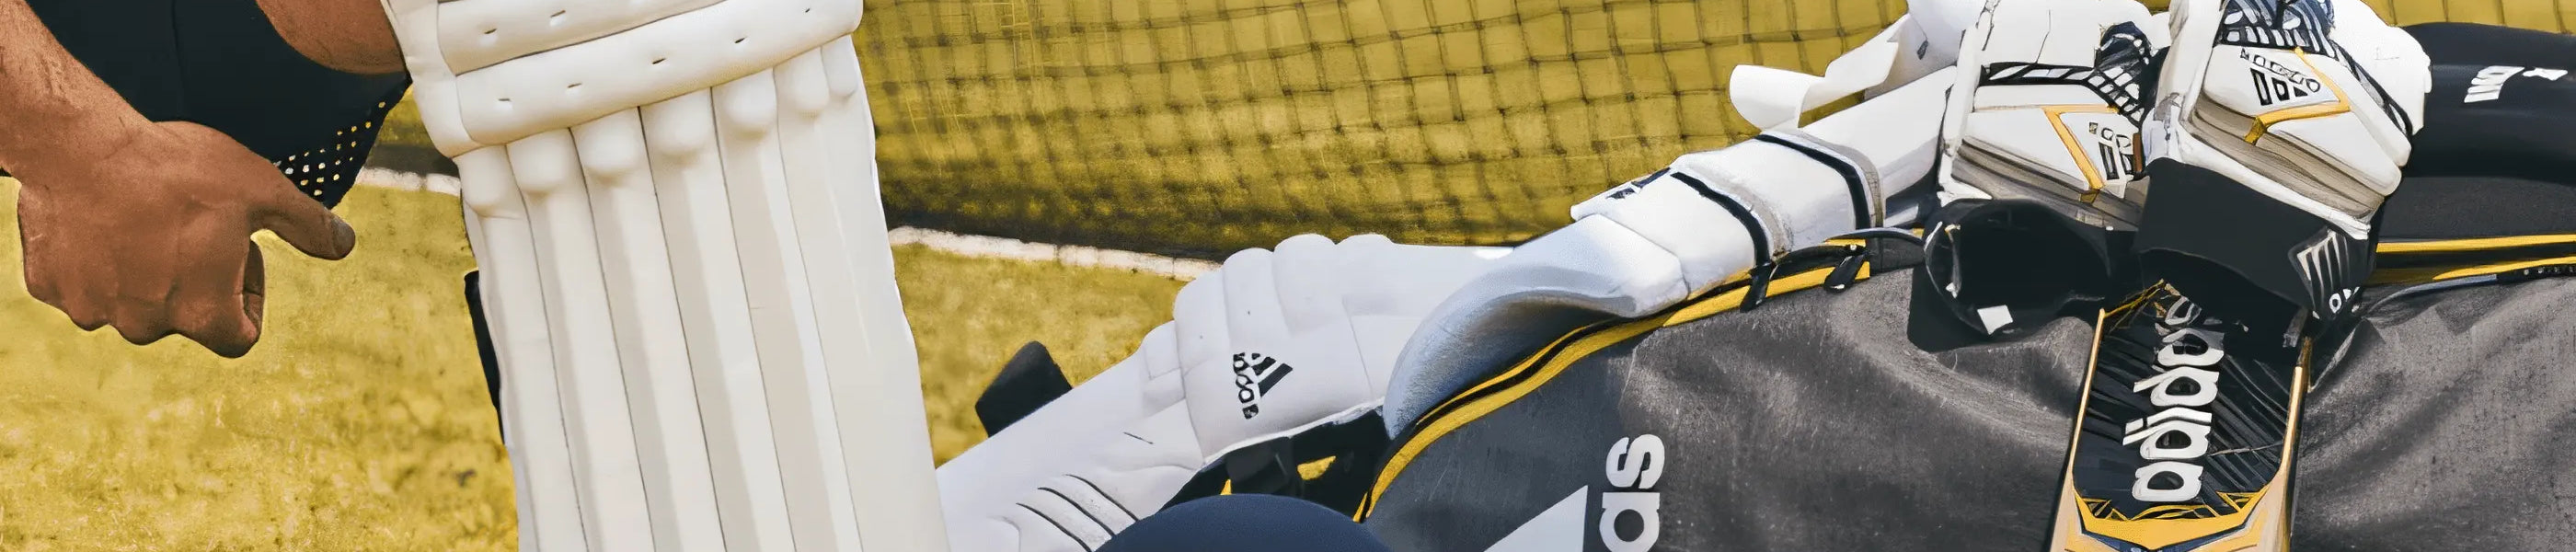 Adidas Batting Gloves